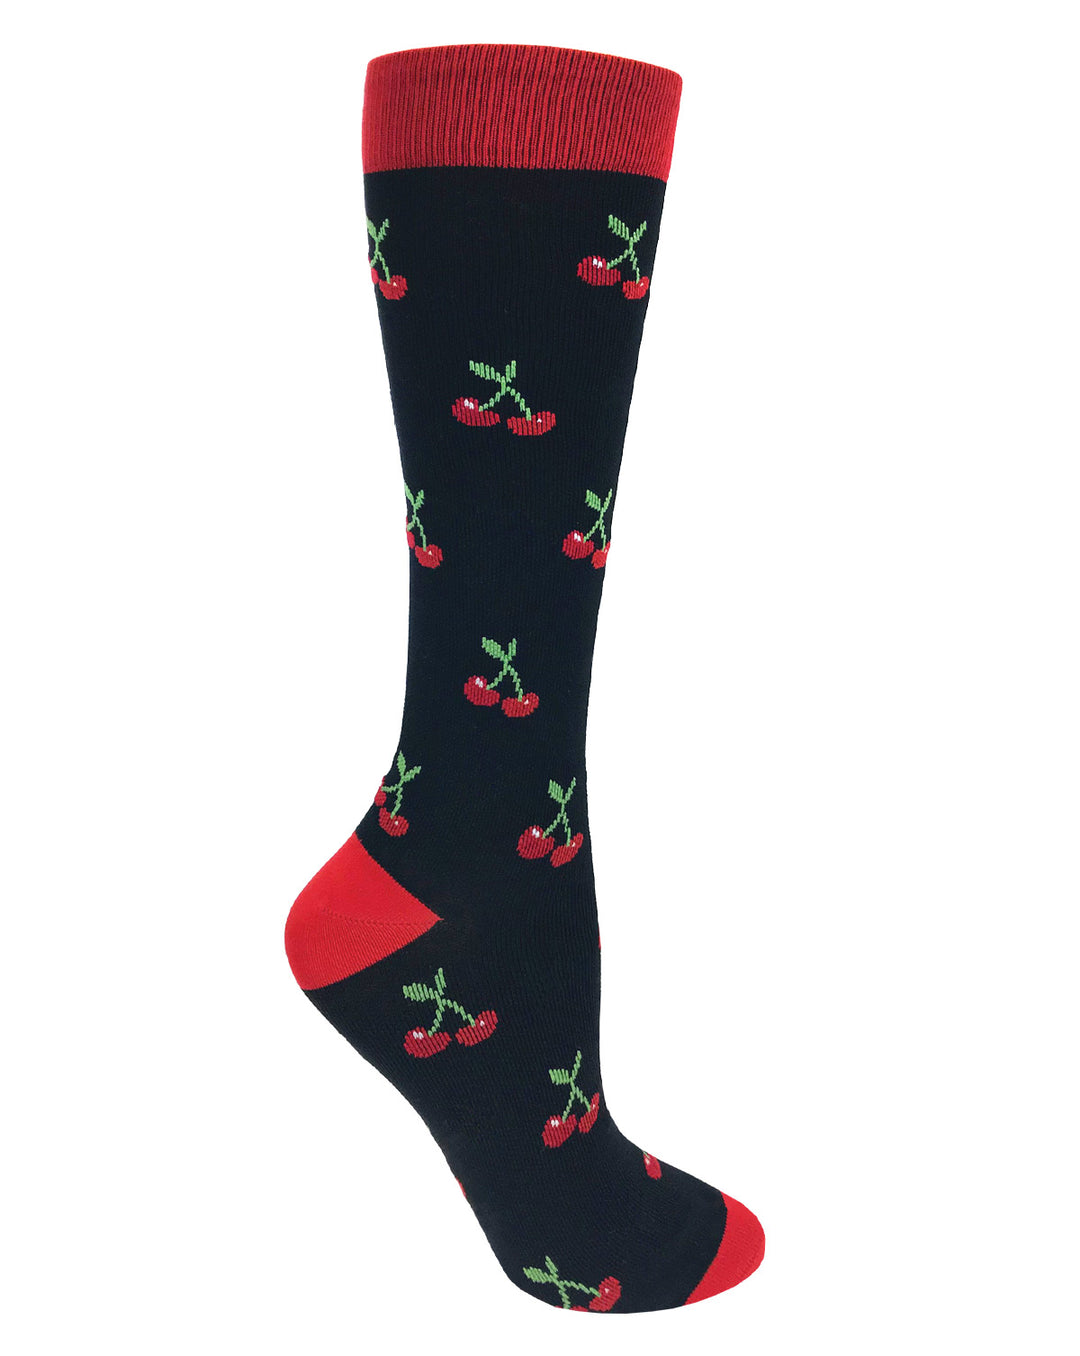 12" Premium Knit Compression Socks - Cherries on Black